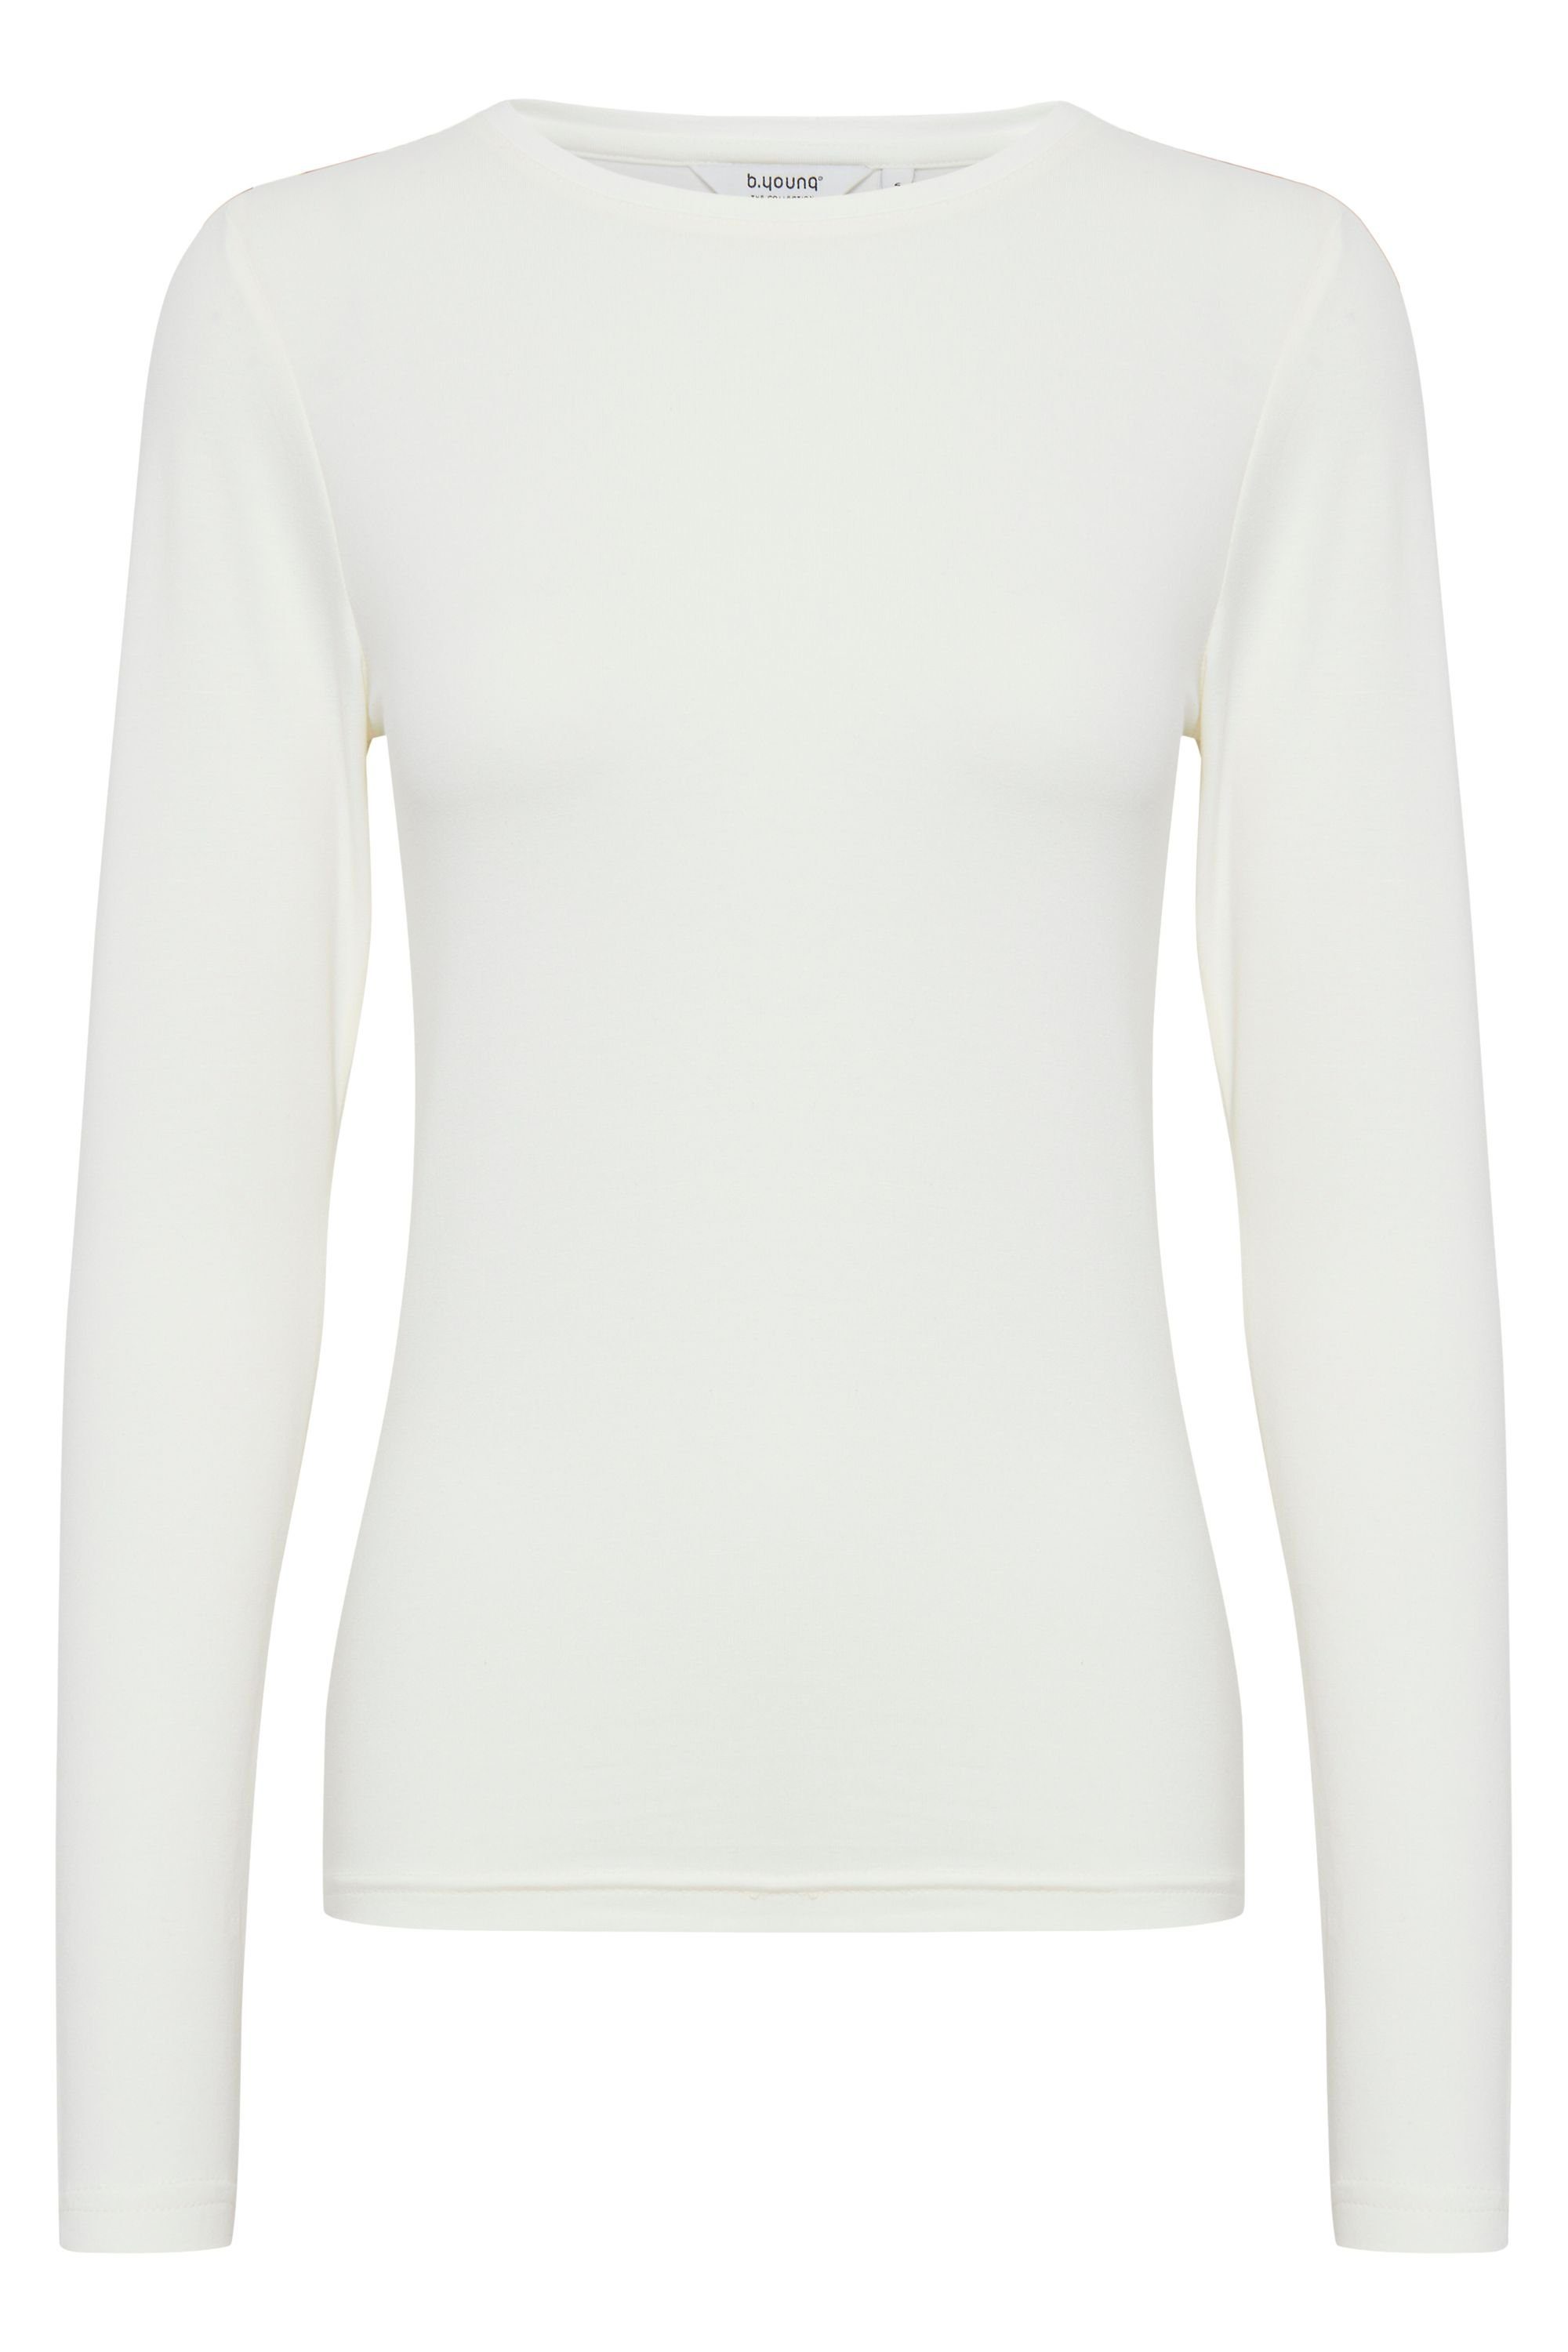 LS Off White Longsleeve Basic BYPAMILA (80115) Sweatshirt TSHIRT -20807594 b.young